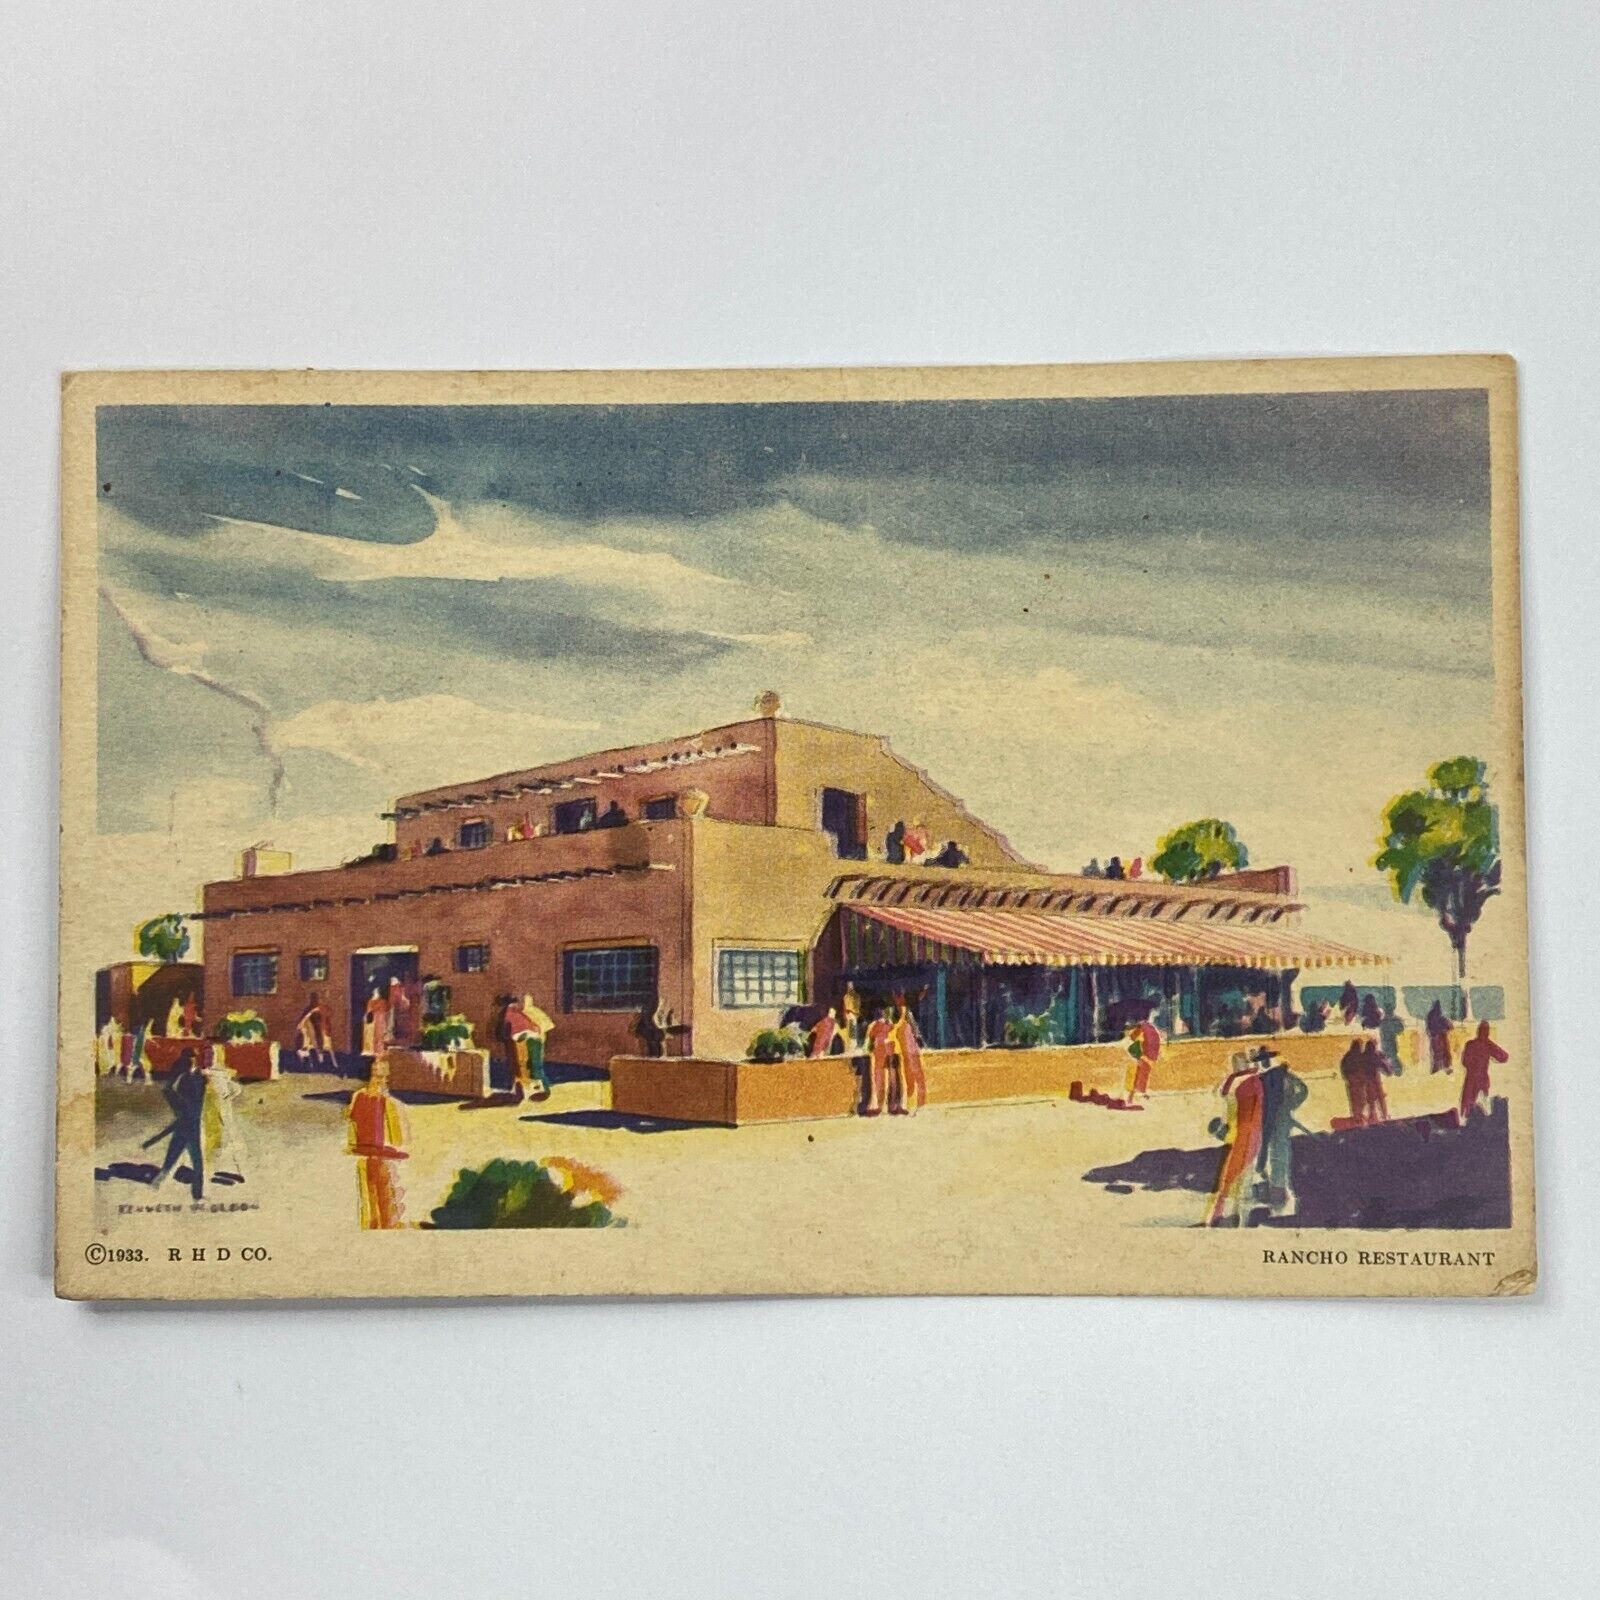 Rancho Restaurant Chicago International Expo 1933 Postcard